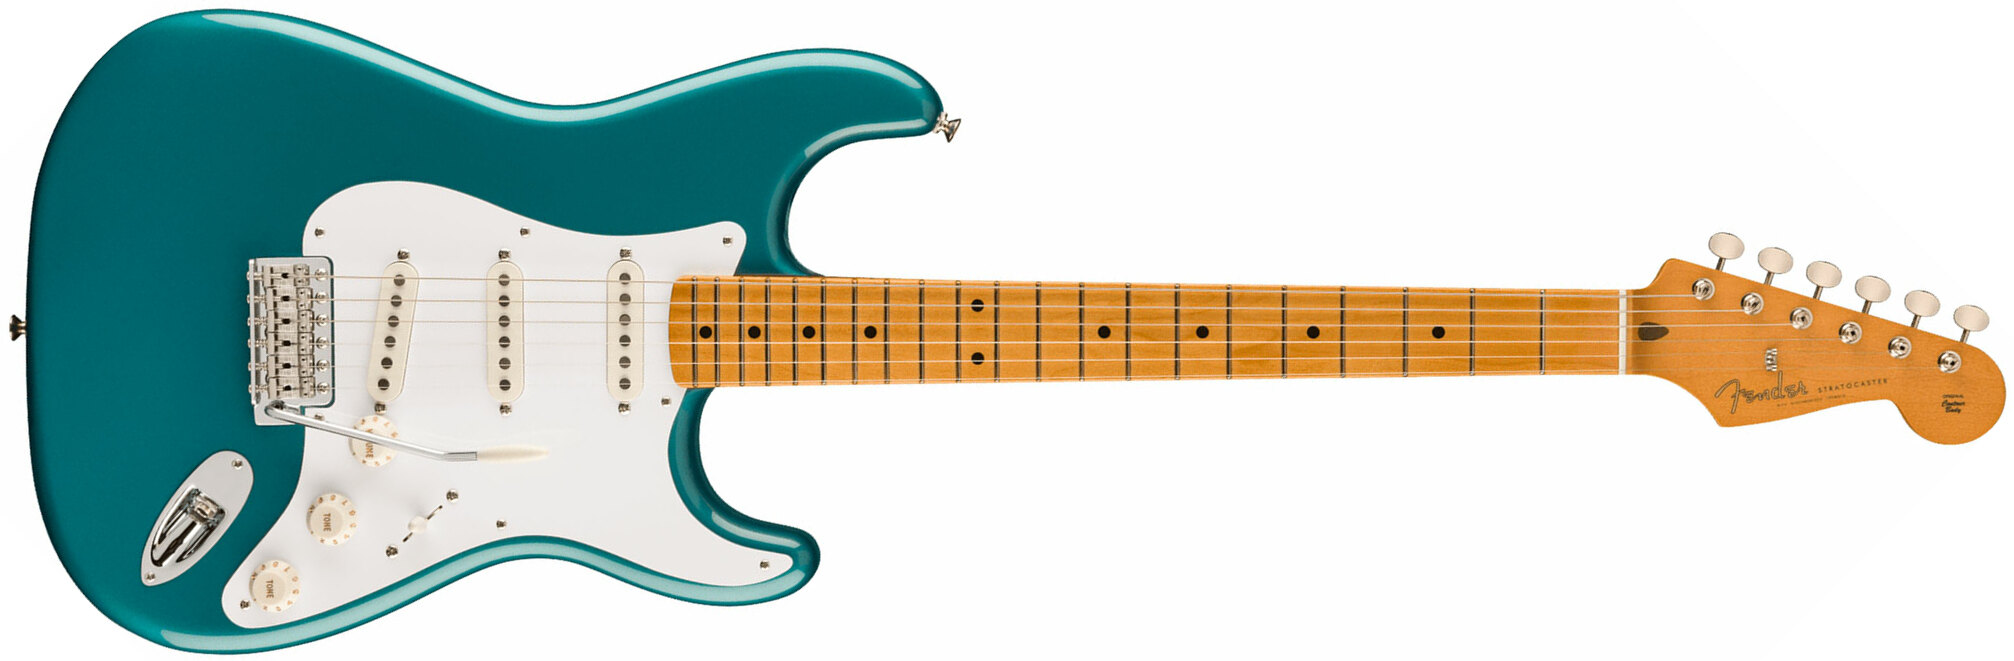 Fender Strat 50s Vintera 2 Mex 3s Trem Mn - Ocean Turquoise - Str shape electric guitar - Main picture